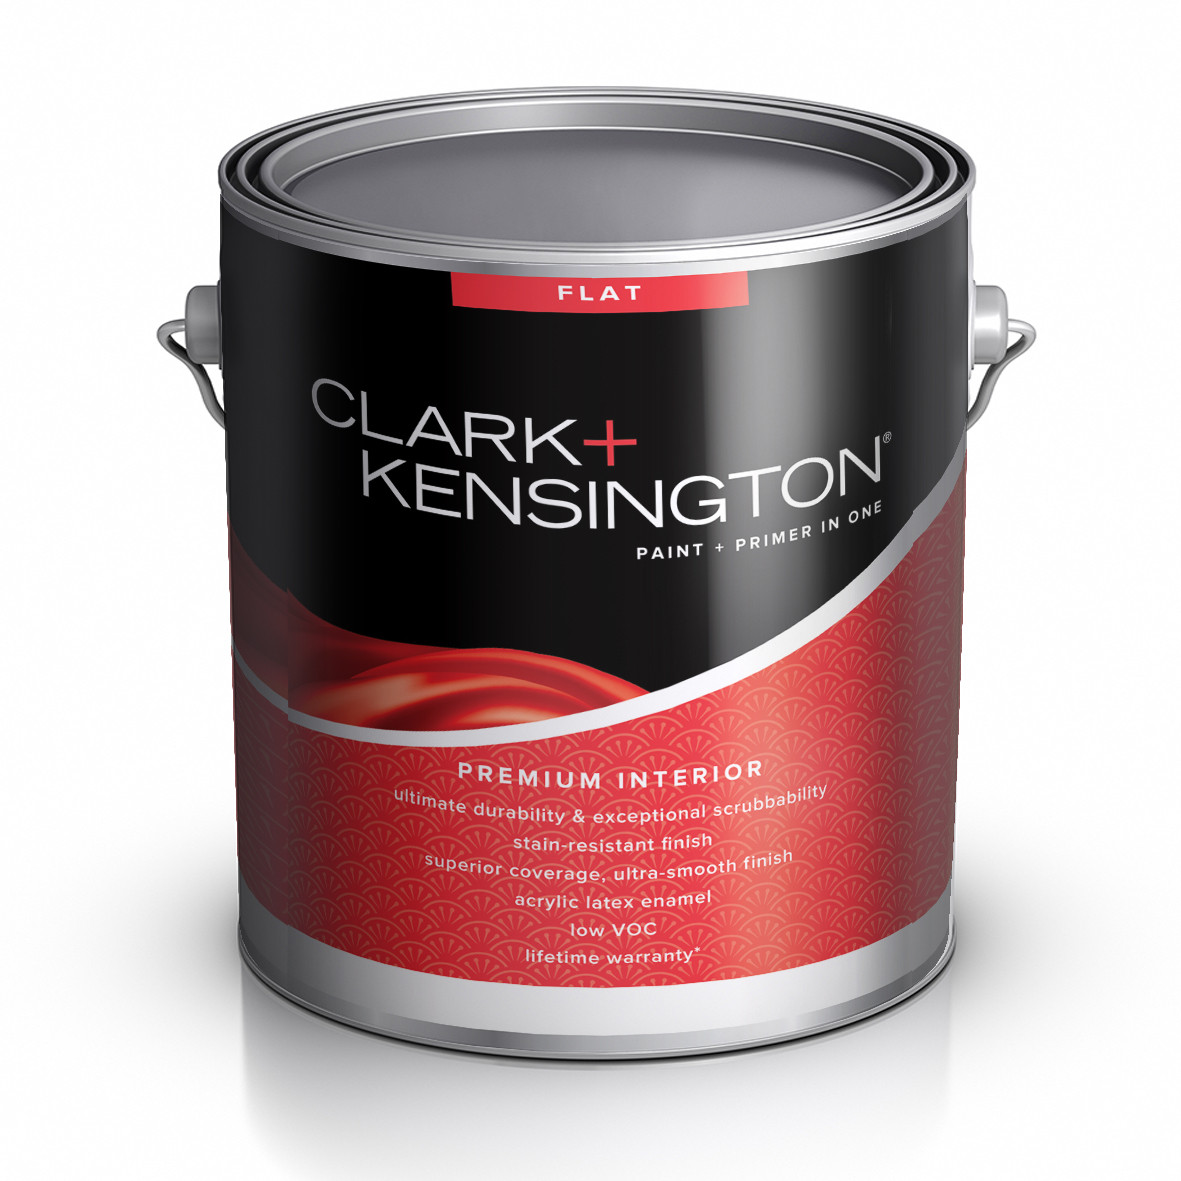 Clark Kensington Paint Primer in one FLAT Premium антивандальная краска+грунт для стен,моющаяся (С база)